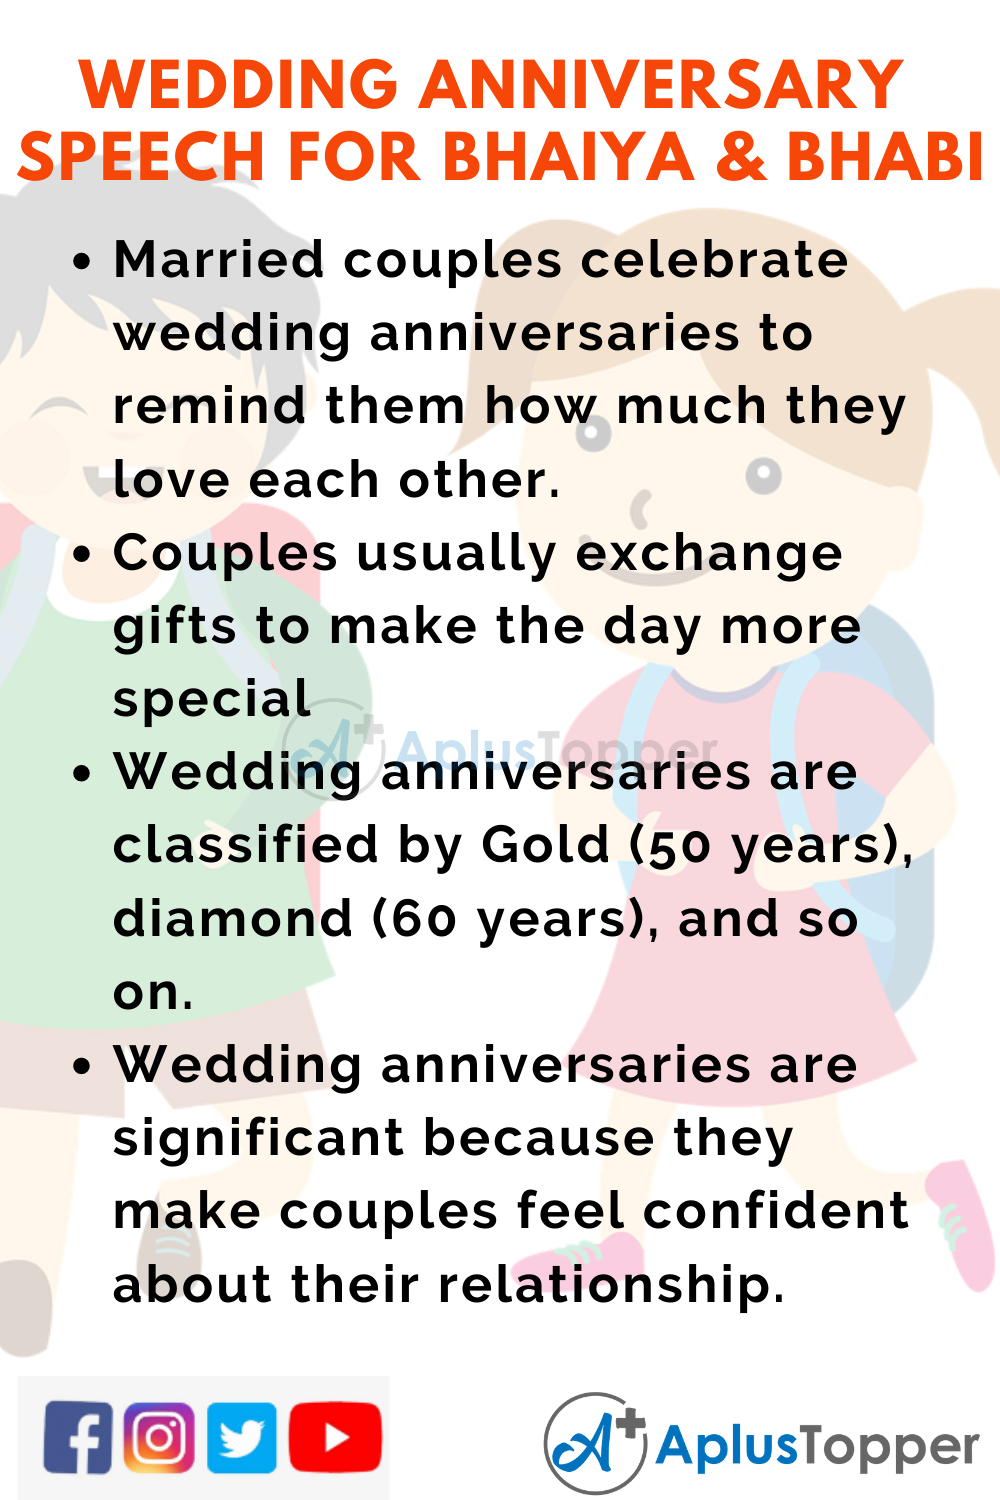 10 Lines On Wedding Anniversary Speech for Bhaiya And Bhabi